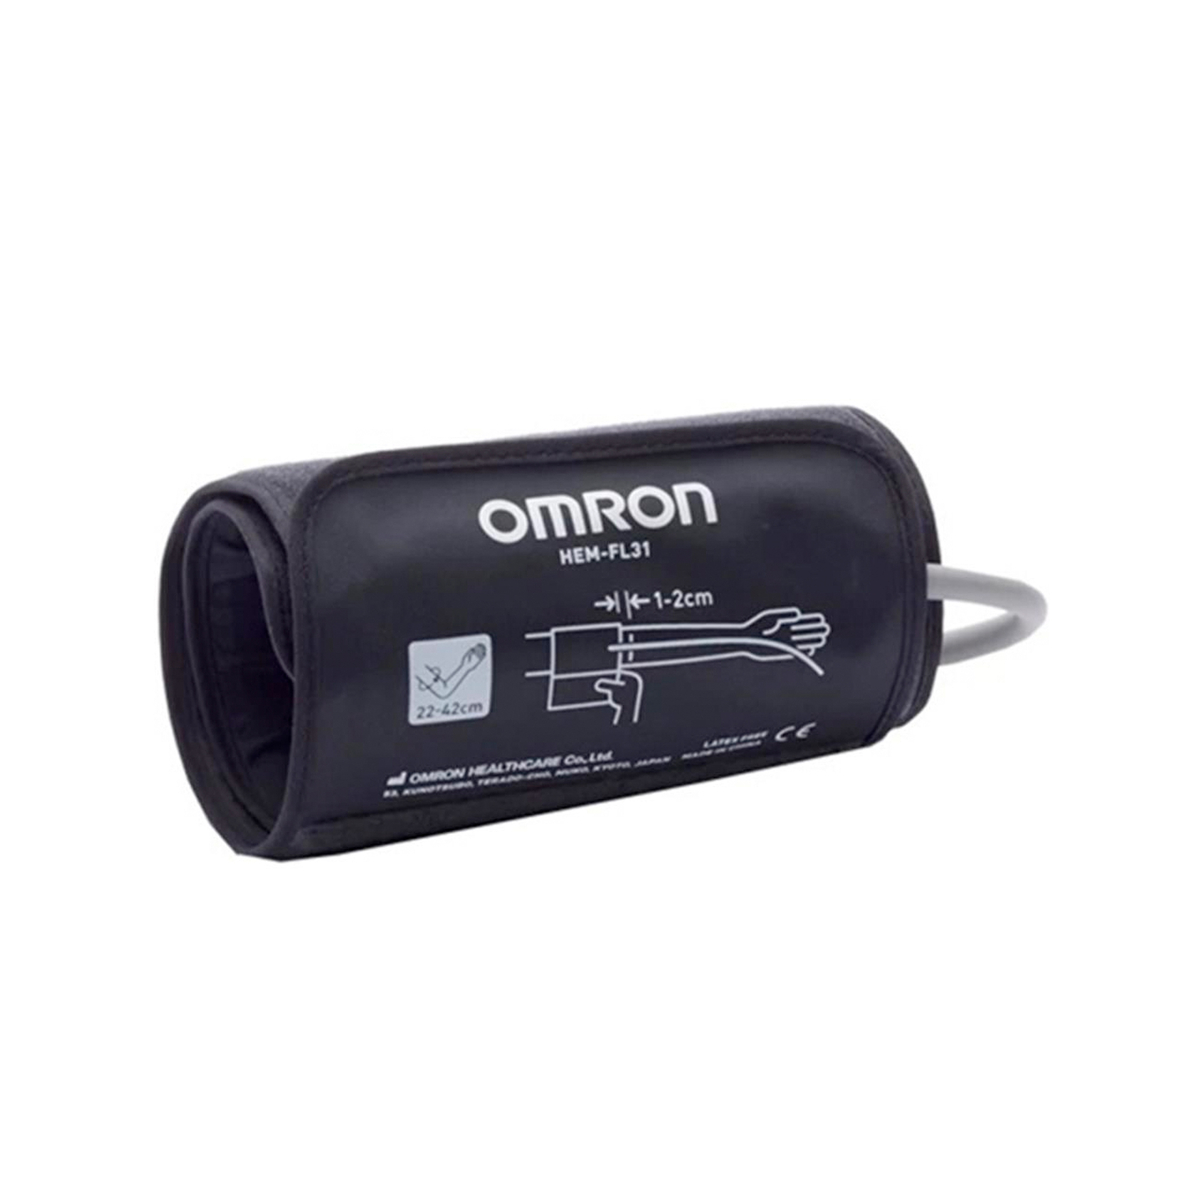 Omron M3 Comfort Upper Arm Blood Pressure Monitor HEM-7155-E